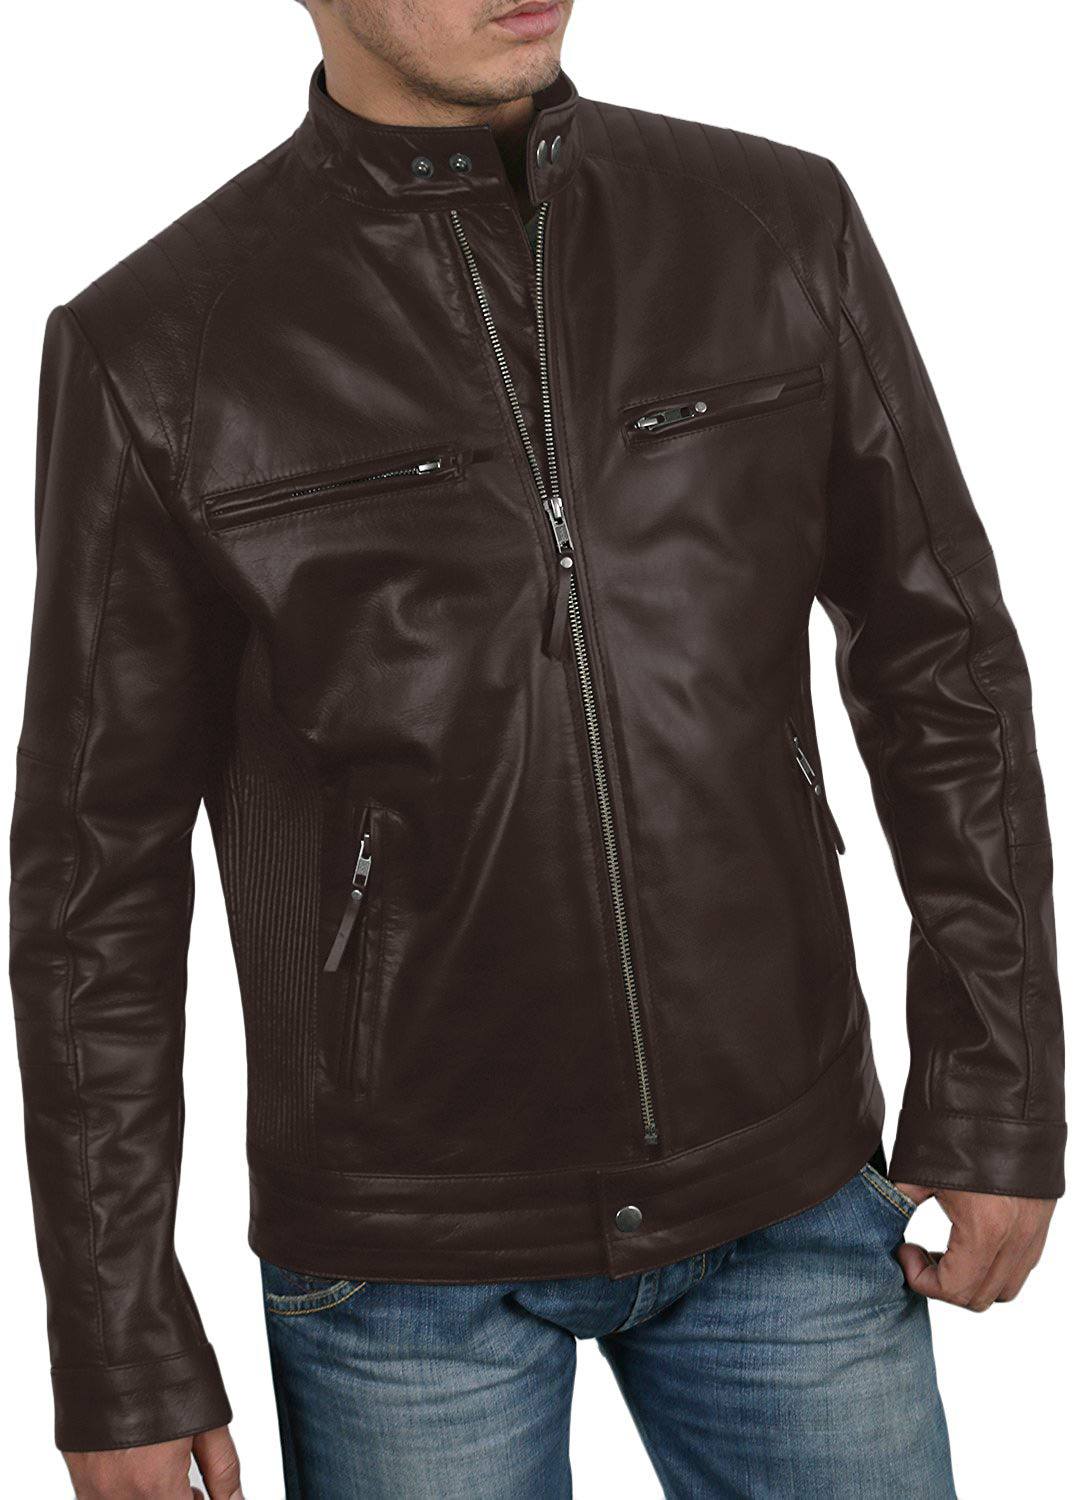 Leather Jackets Hub Mens Genuine Cowhide Leather Jacket (Black, Racer Jacket) - 1501626